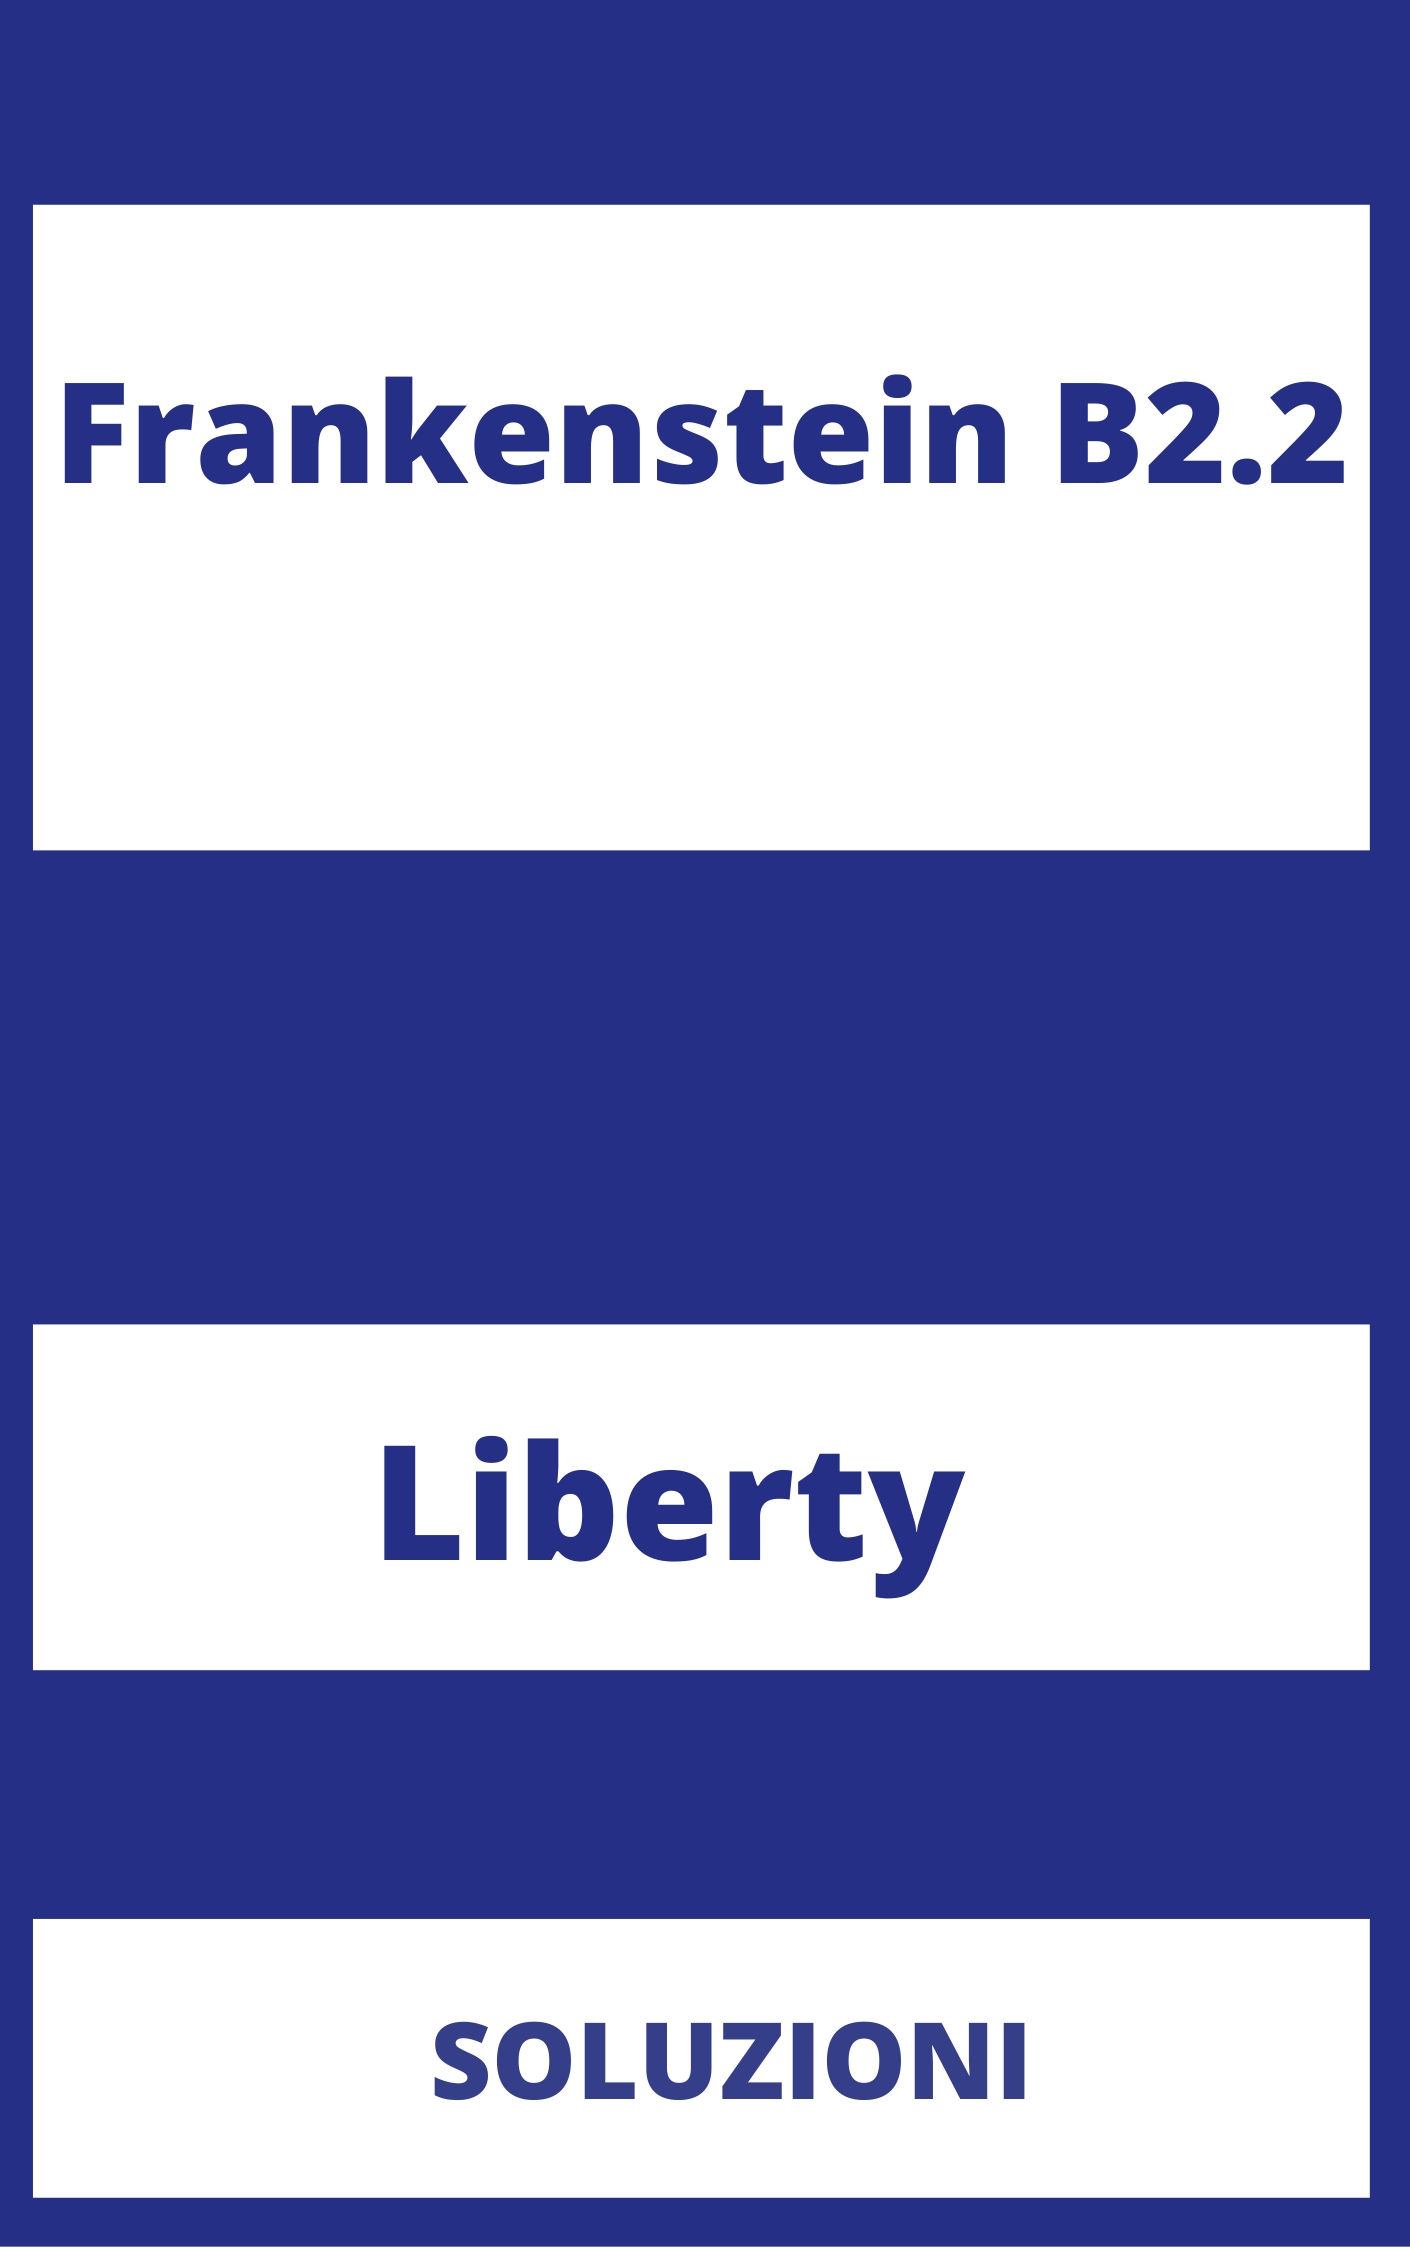 Frankenstein B2.2 Soluzioni